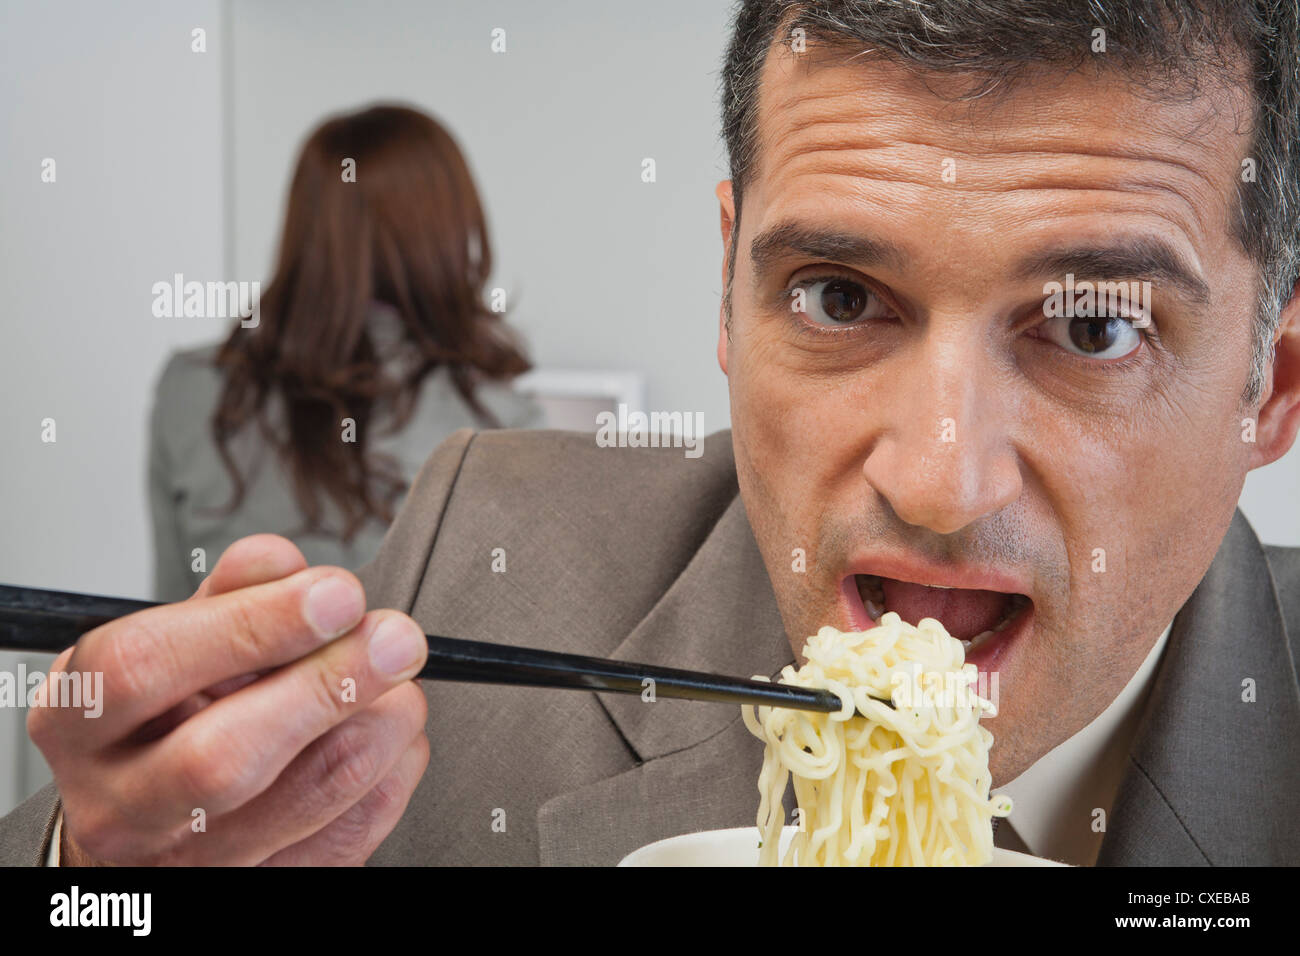 Reife Geschäftsmann Essen Ramen-Nudeln im Büro Stockfoto